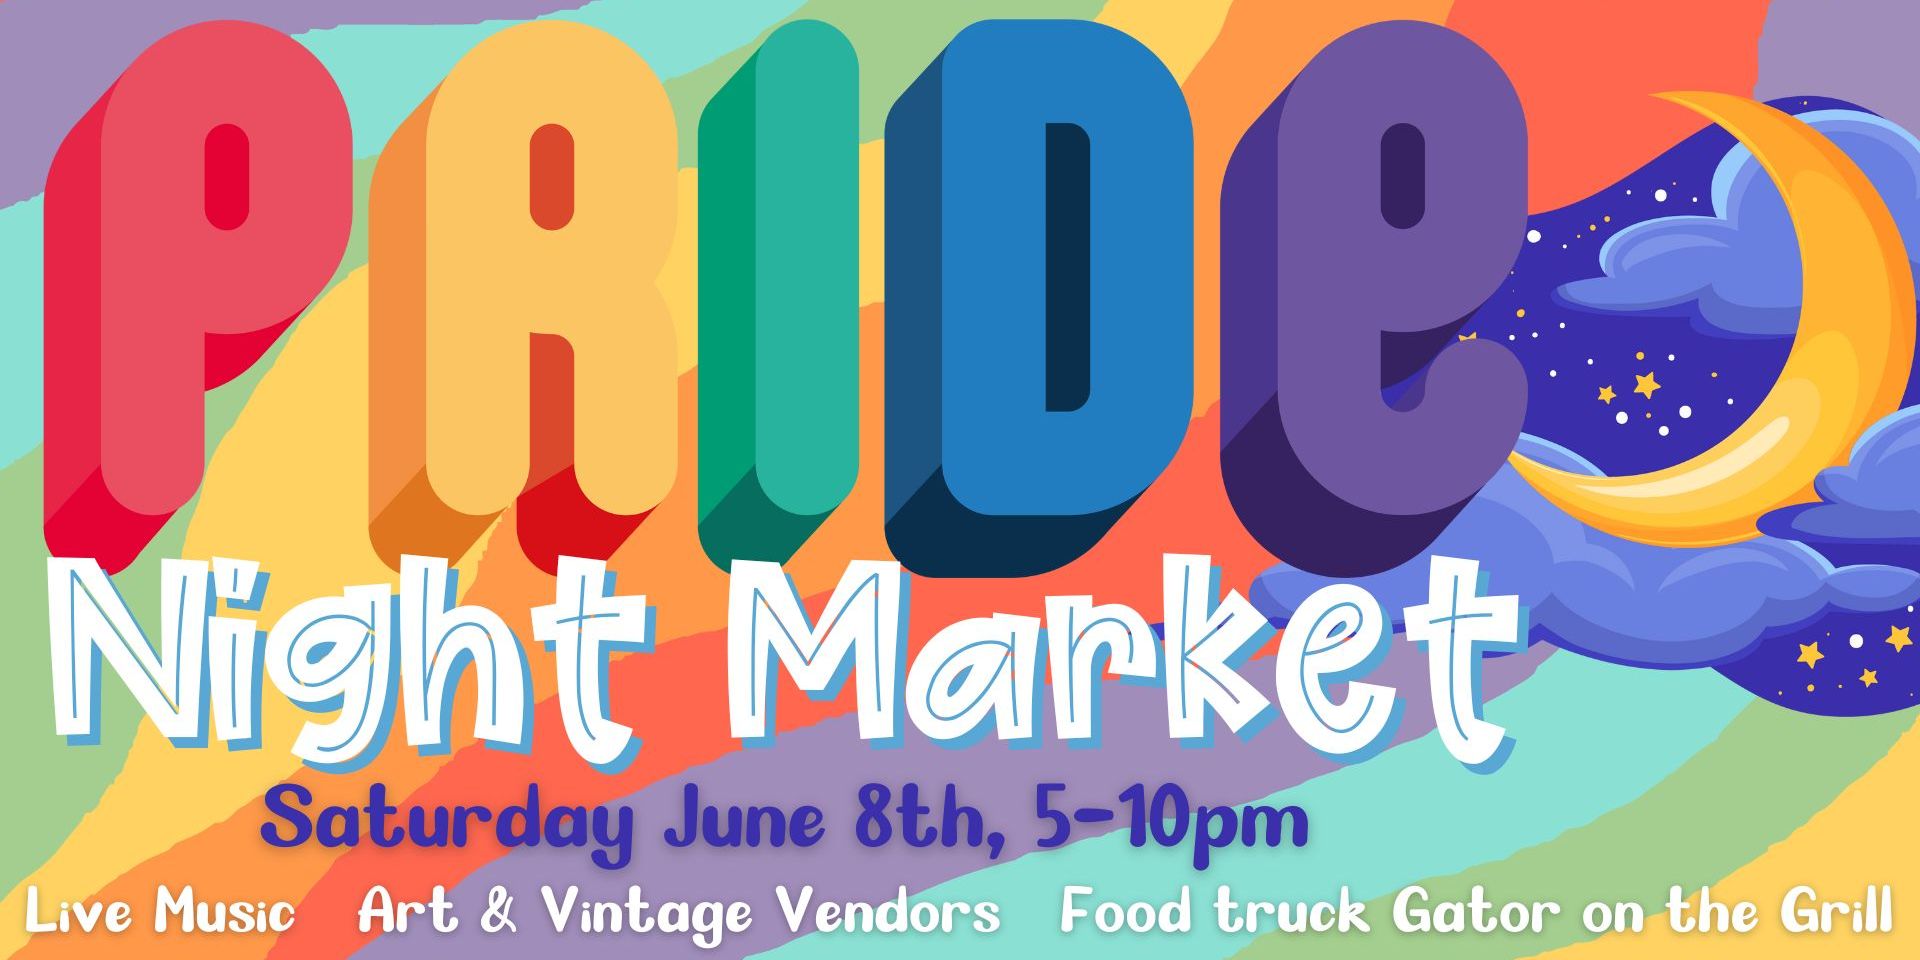 Pride Night Market promotional image